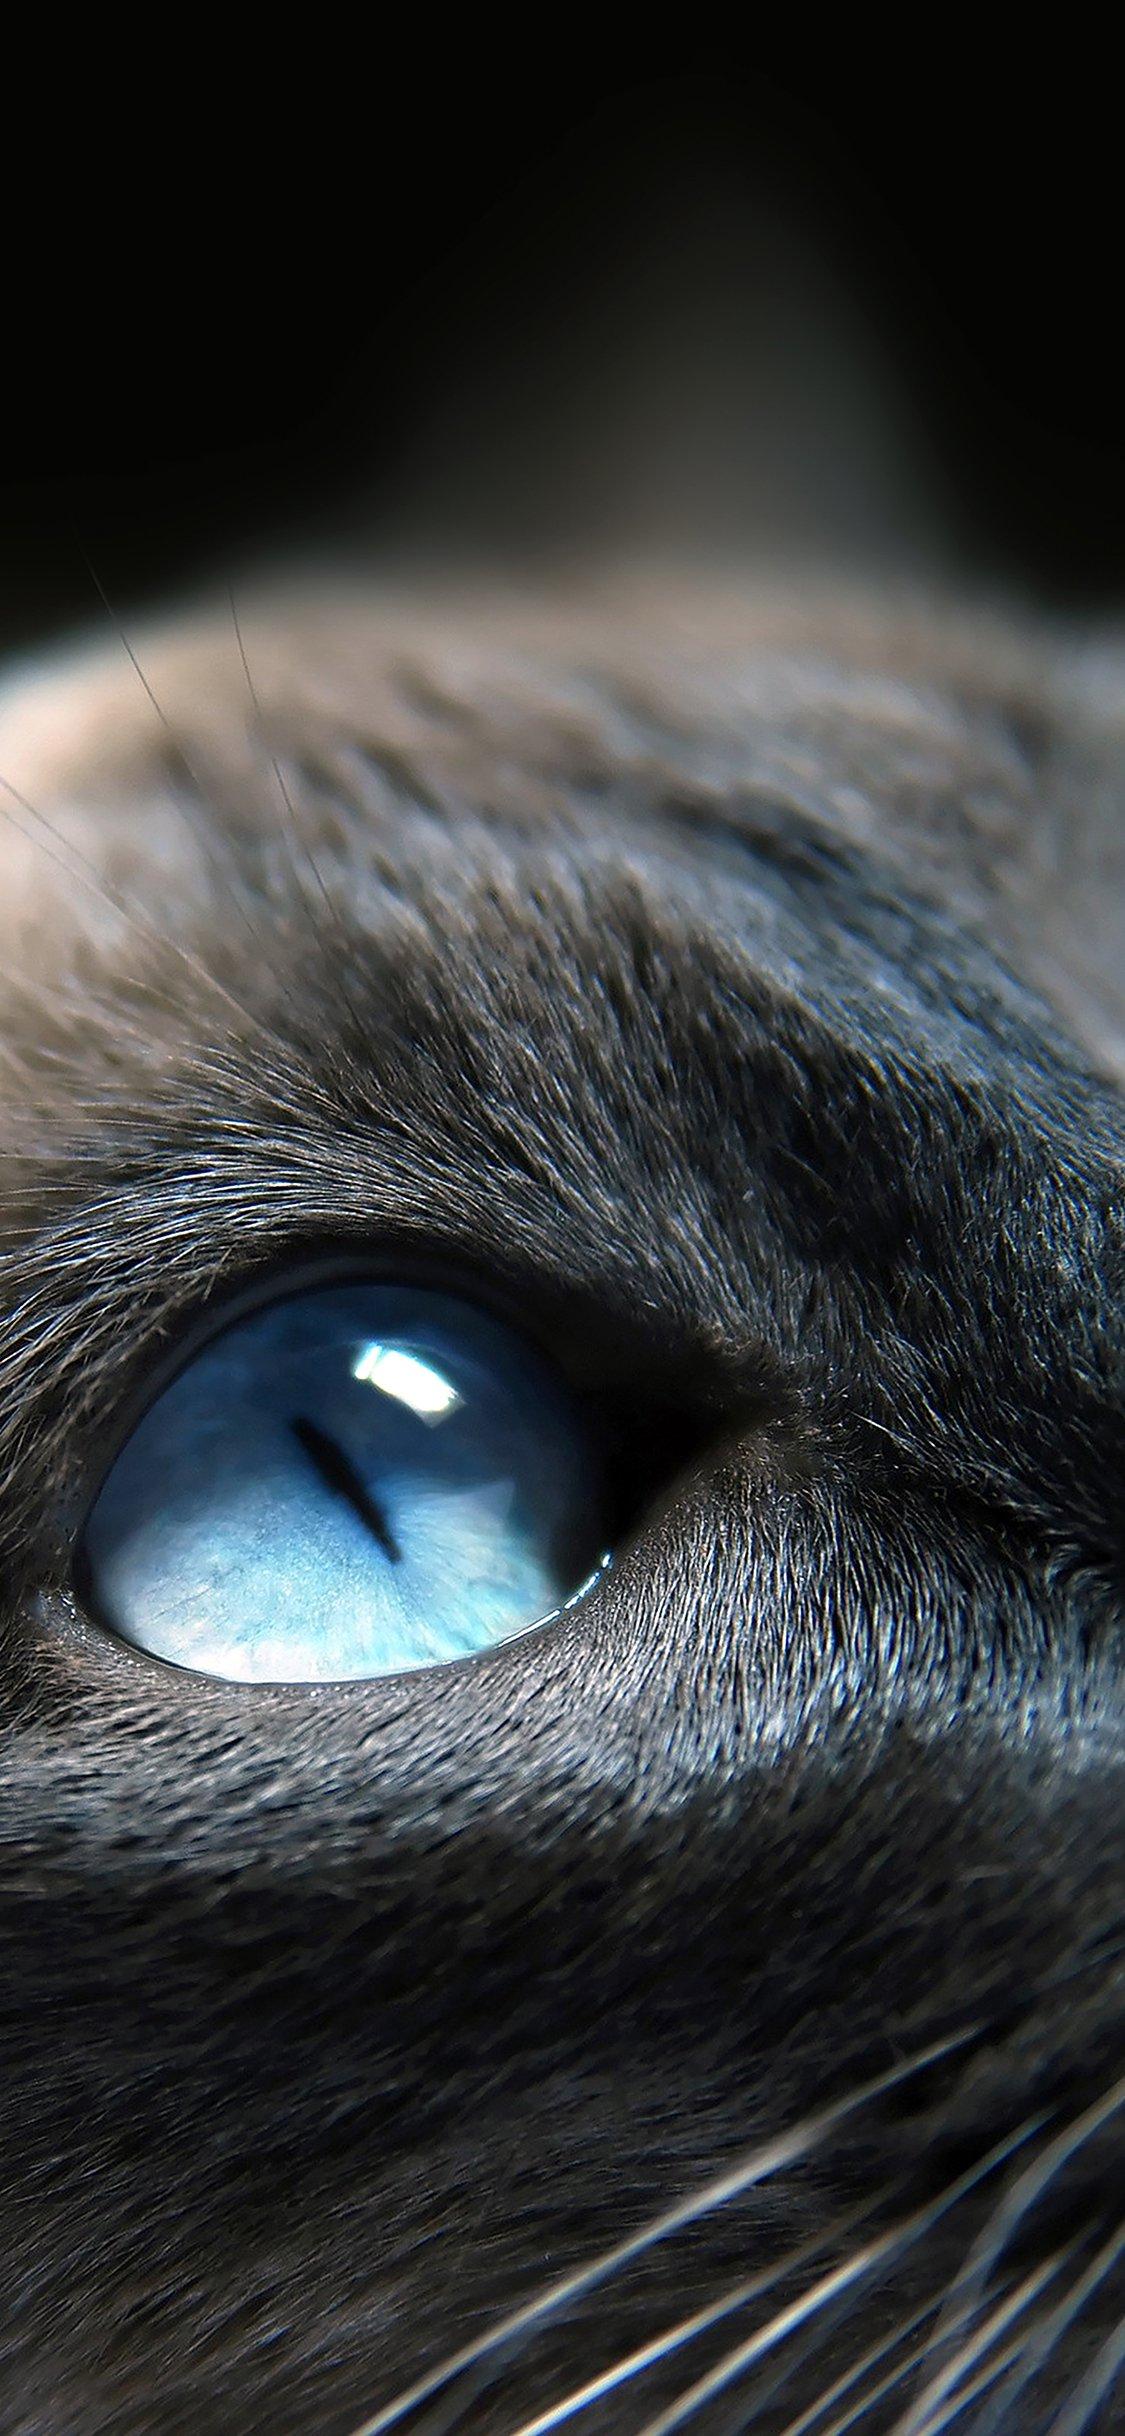 Cats blue eye cute iPhone X Wallpaper Free Download